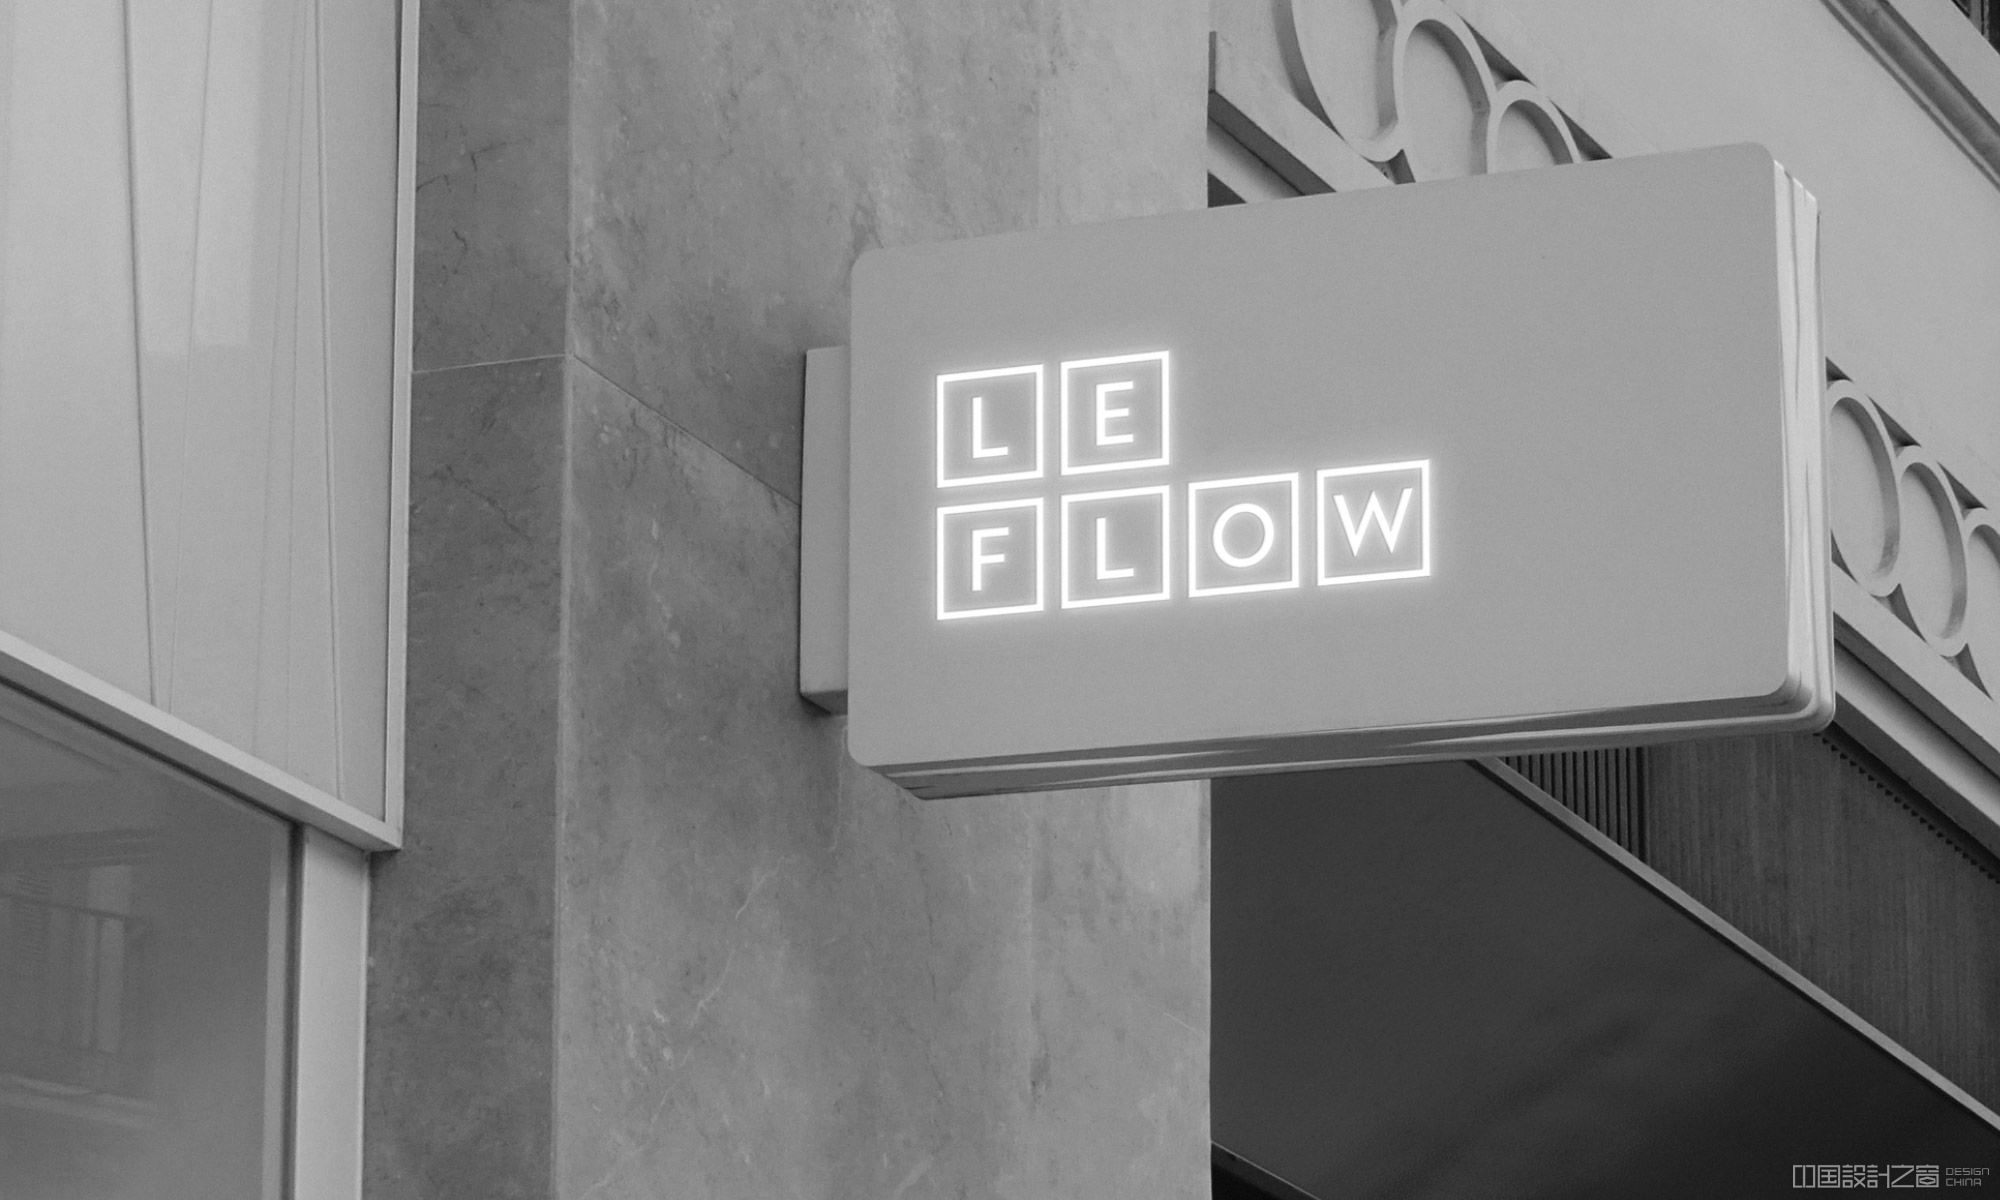 Le Flow logo lightbox